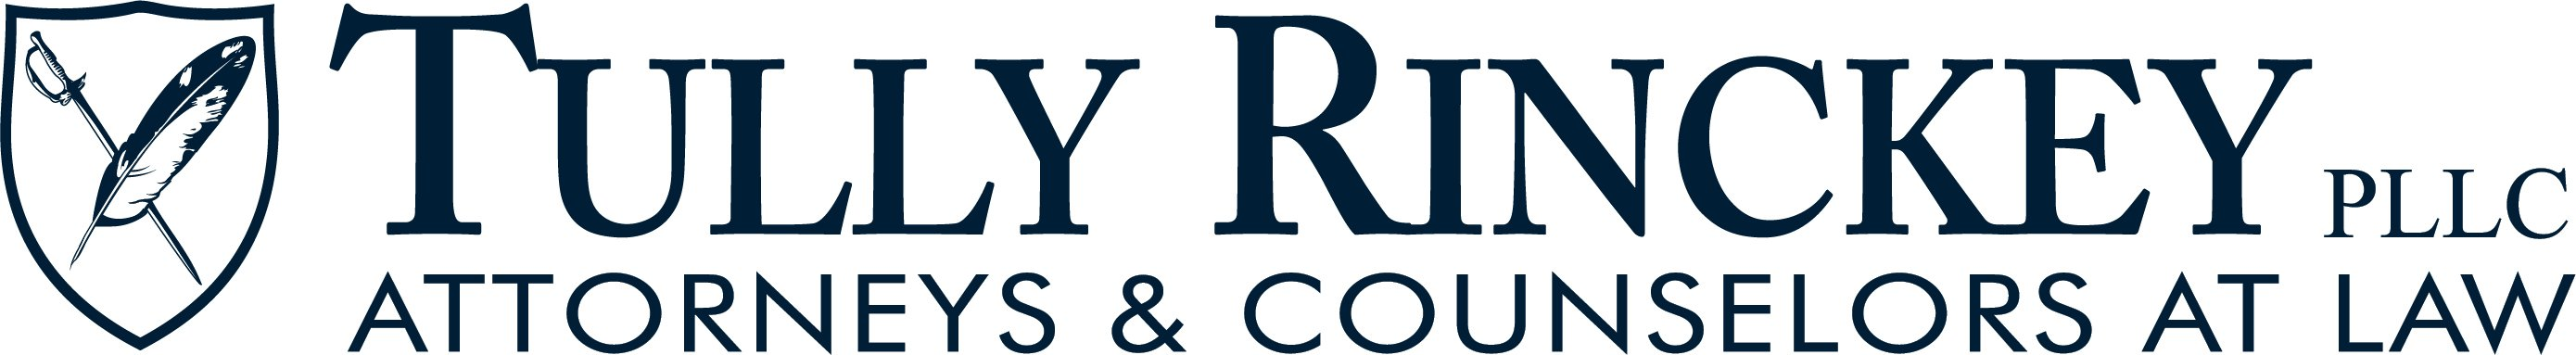 Tully Rinckey PLLC logo